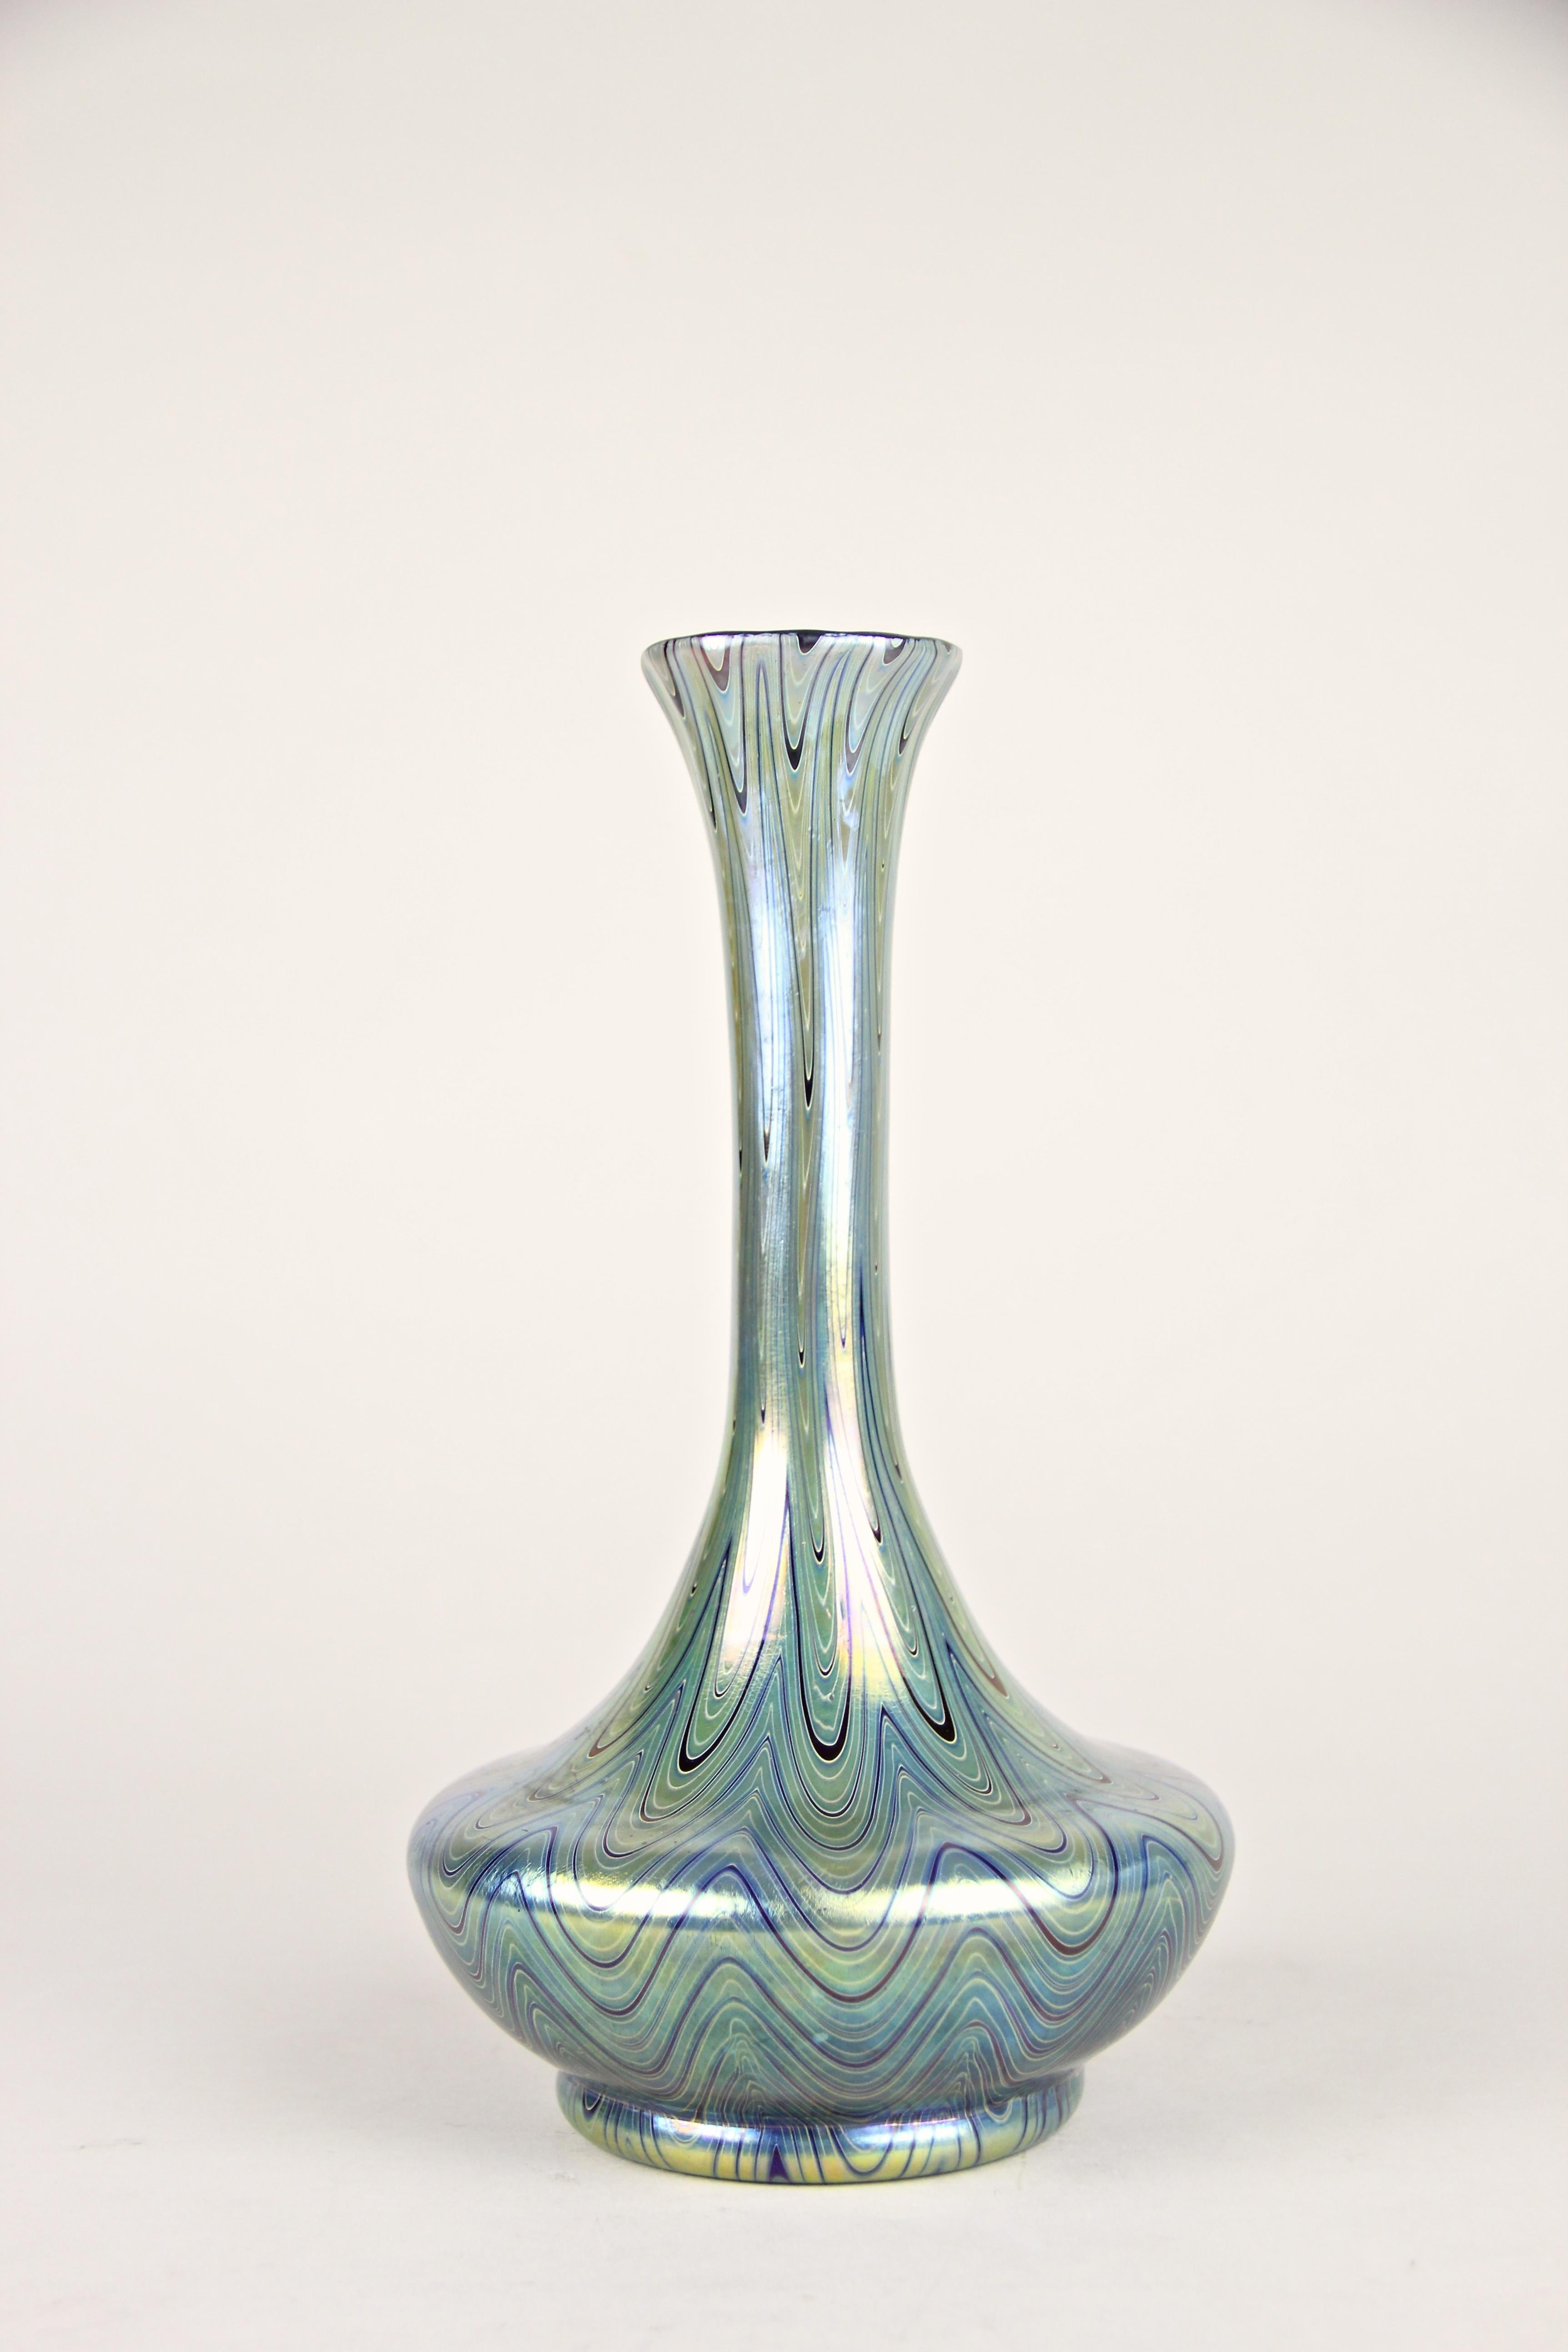 Art Nouveau Loetz Witwe Glass Vase Rubin Phänomen Genre 6893 Iriscident, Bohemia, circa 1899 For Sale